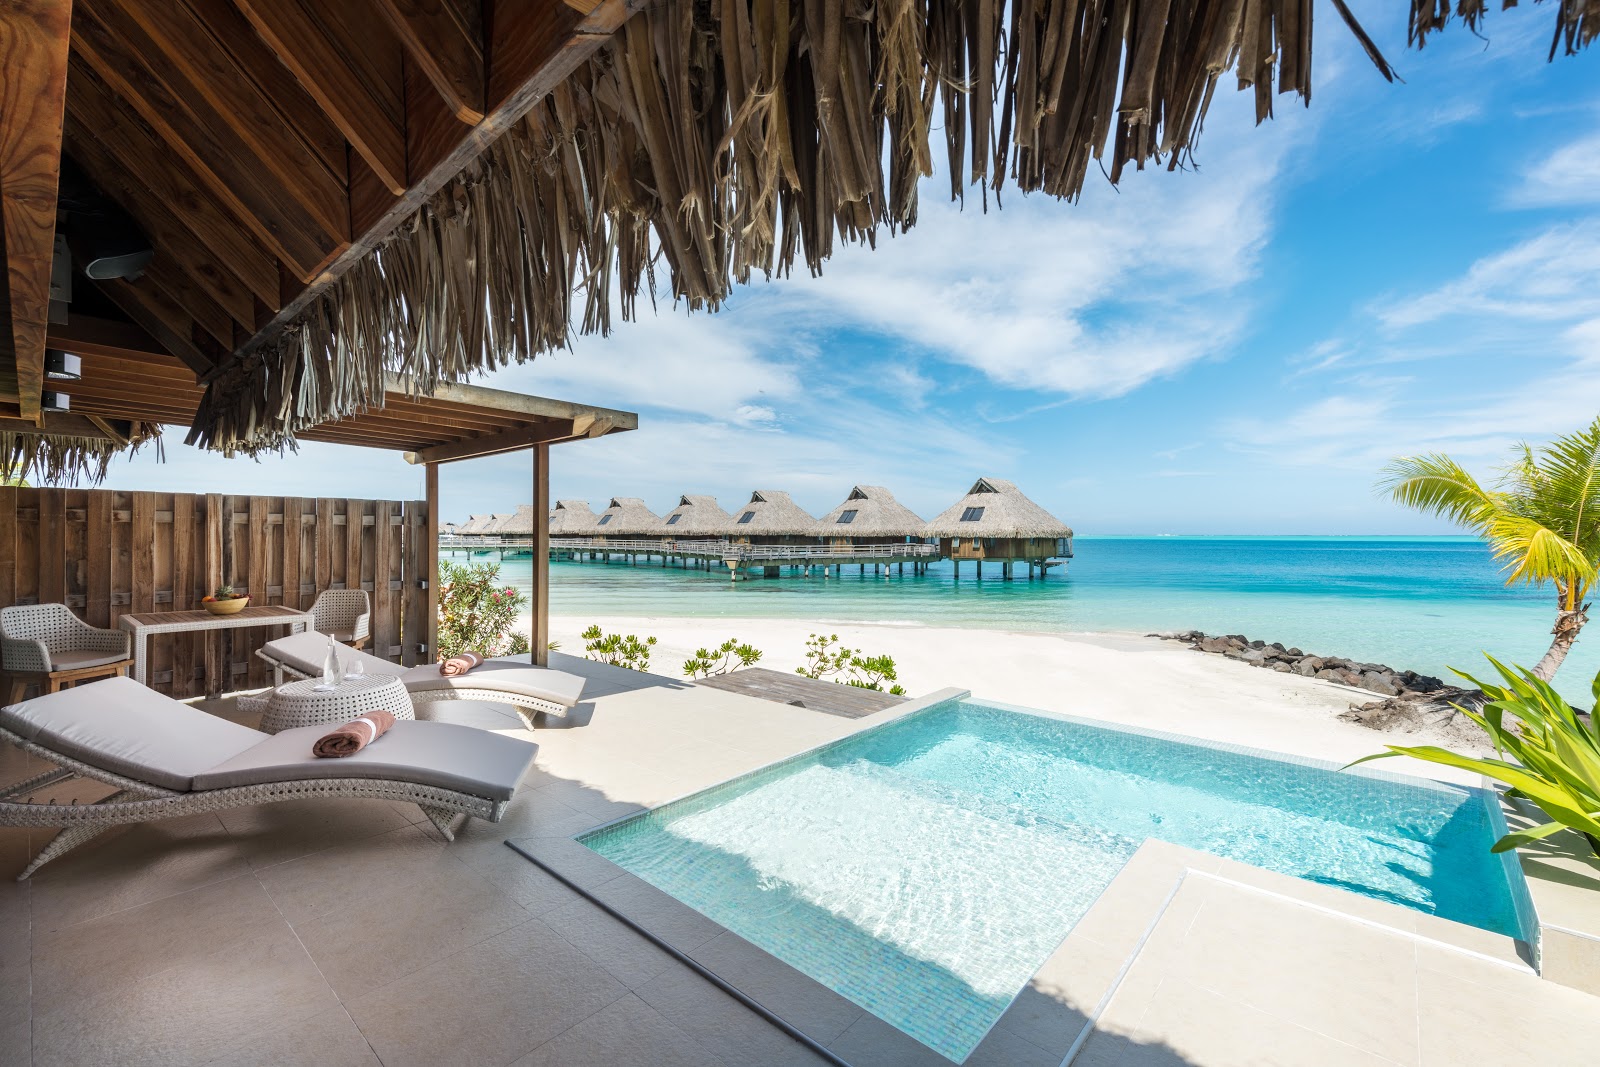 Photo of Conrad Bora Bora beach - popular place among relax connoisseurs